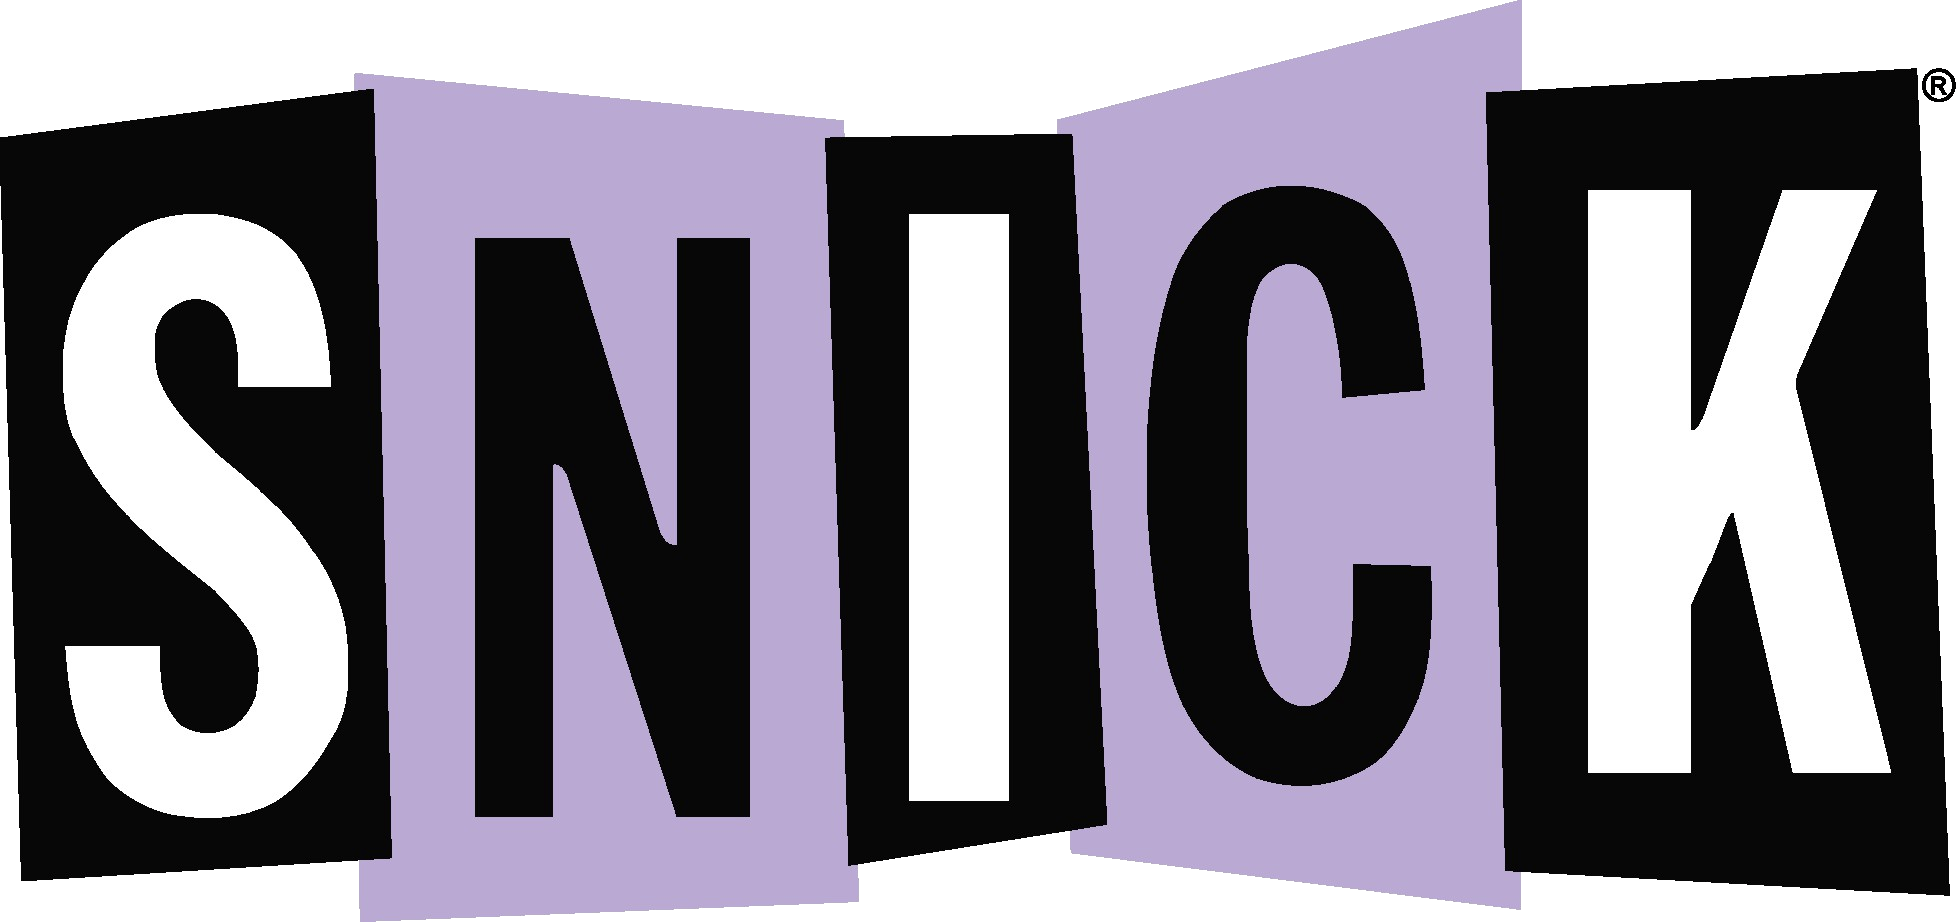 Old TeenNick Logo - SNICK | Nickelodeon | FANDOM powered by Wikia